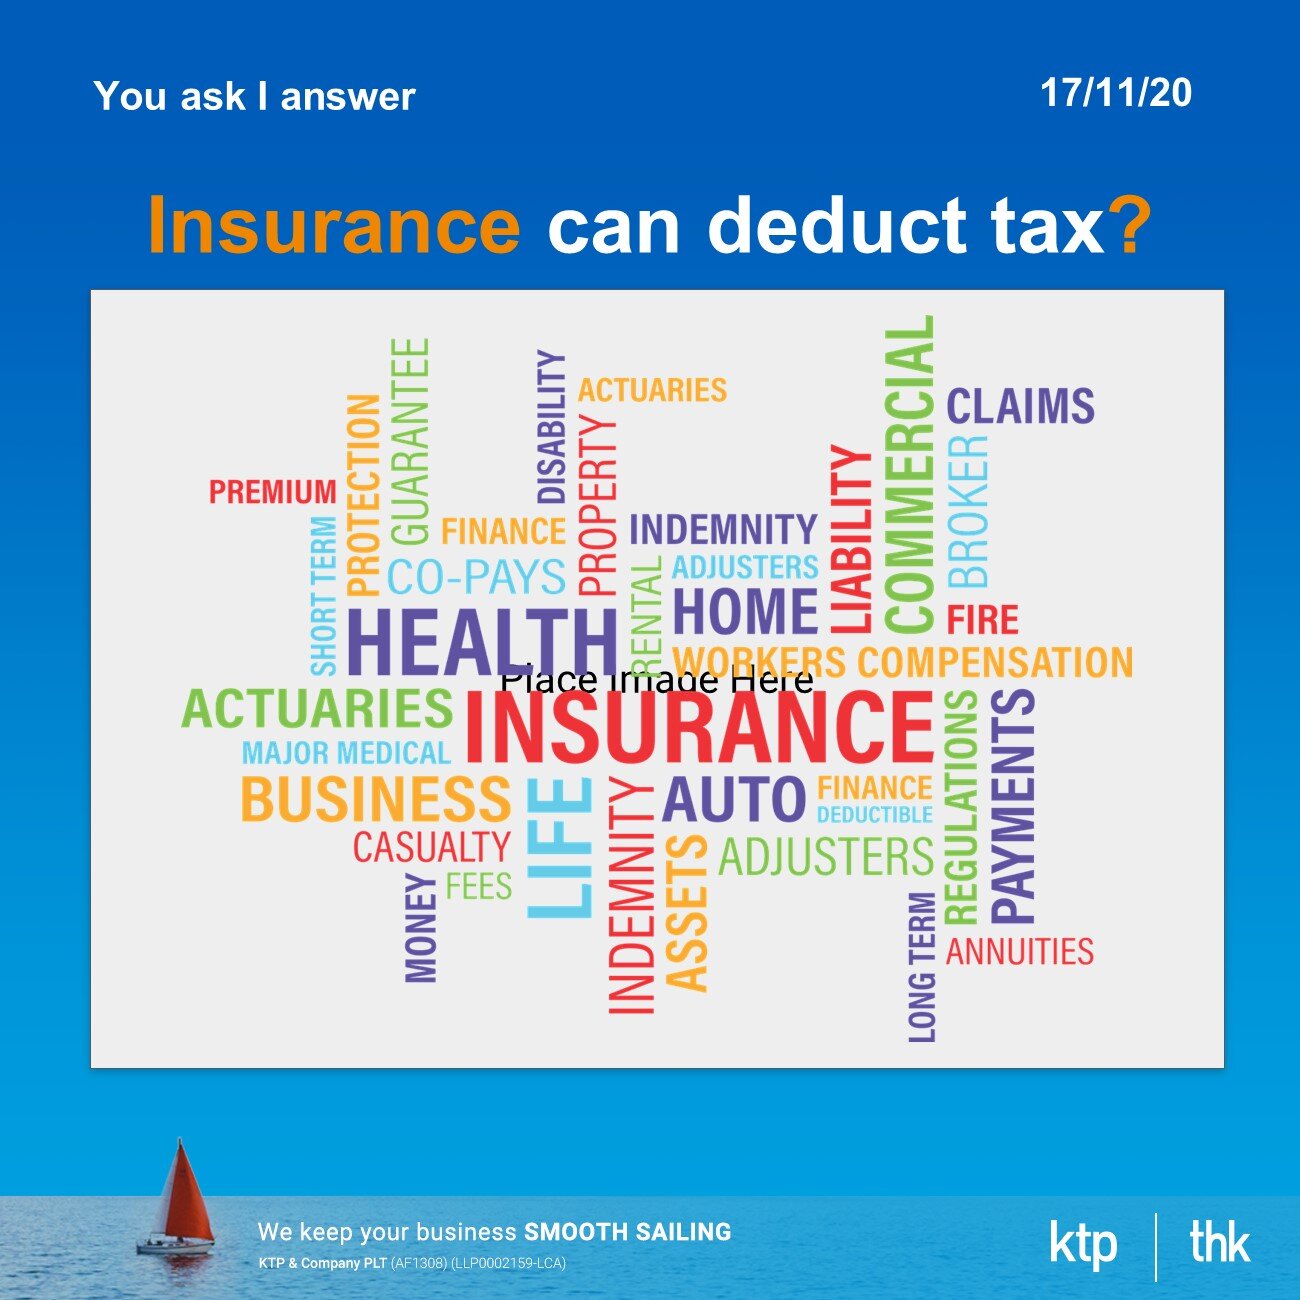 keyman-insurance-life-insurance-marketing-ideas-life-insurance